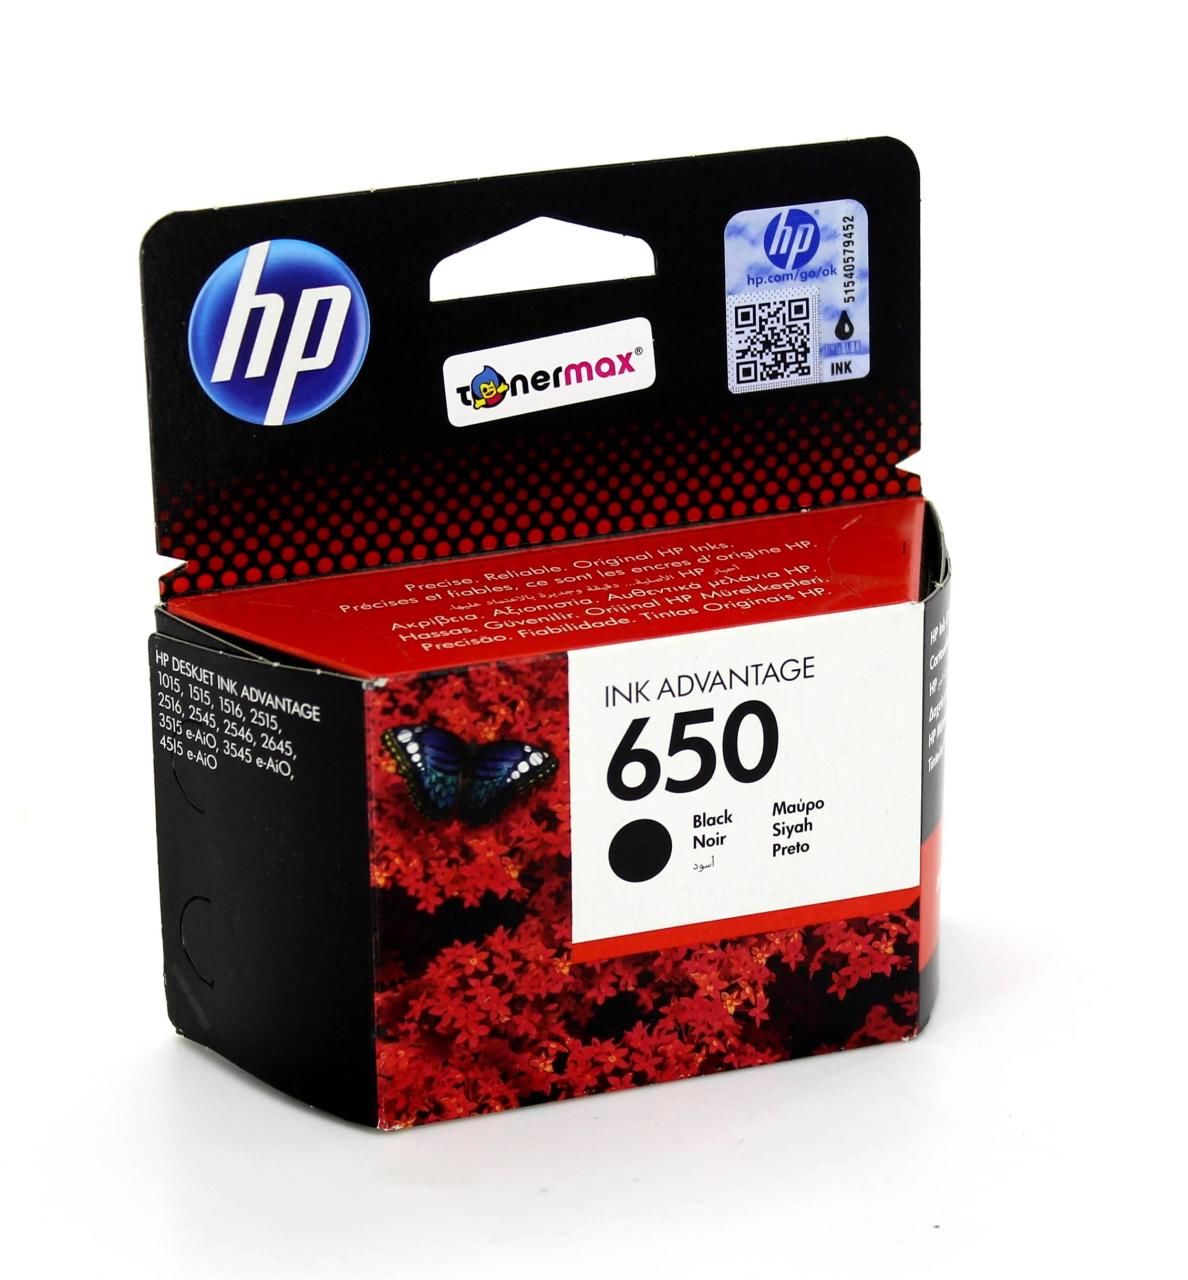 HP 650 CZ101A Orjinal Siyah Kartuş 1015 / 1515 / 1516 / 2545 / 2546